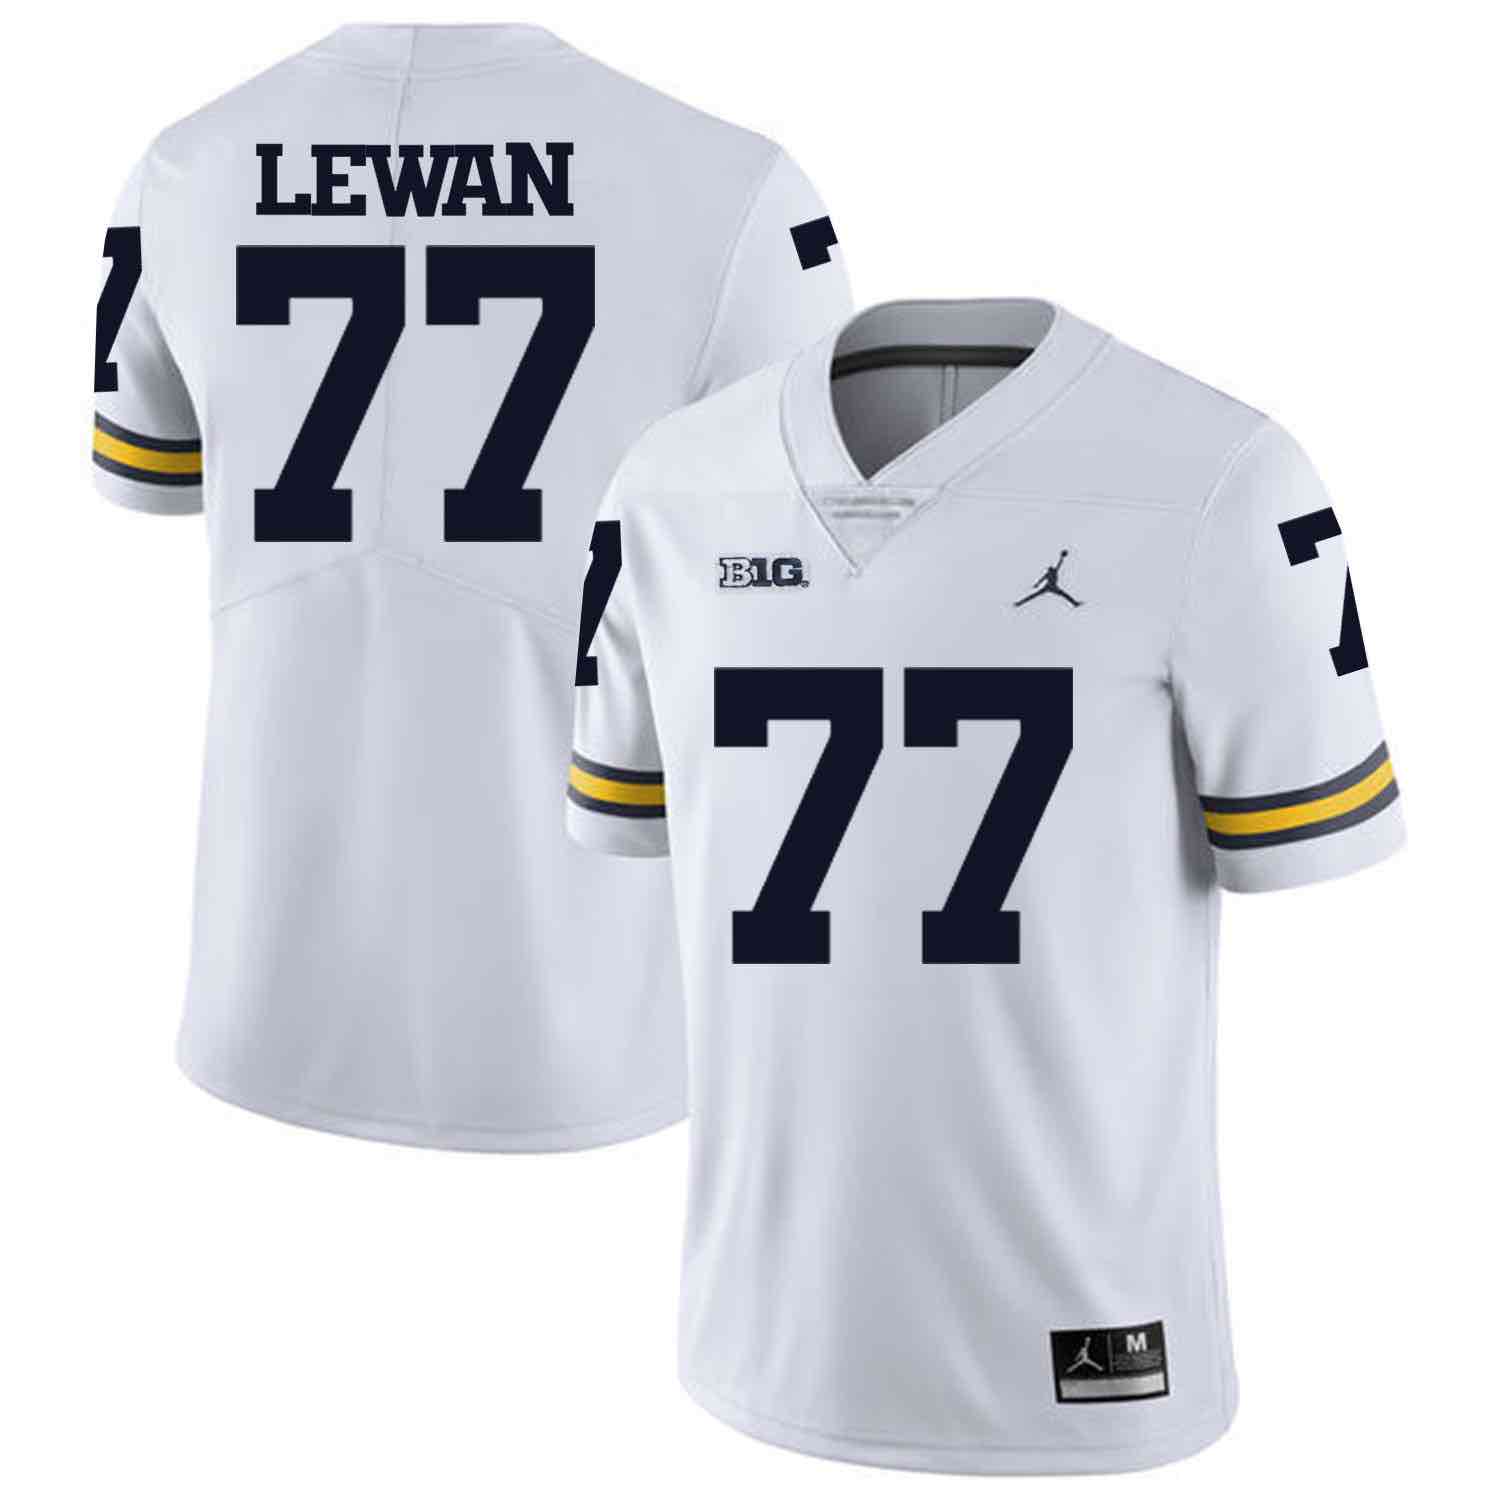 NCAA Michigan Wolverines #77 Lewal White Football Jersey